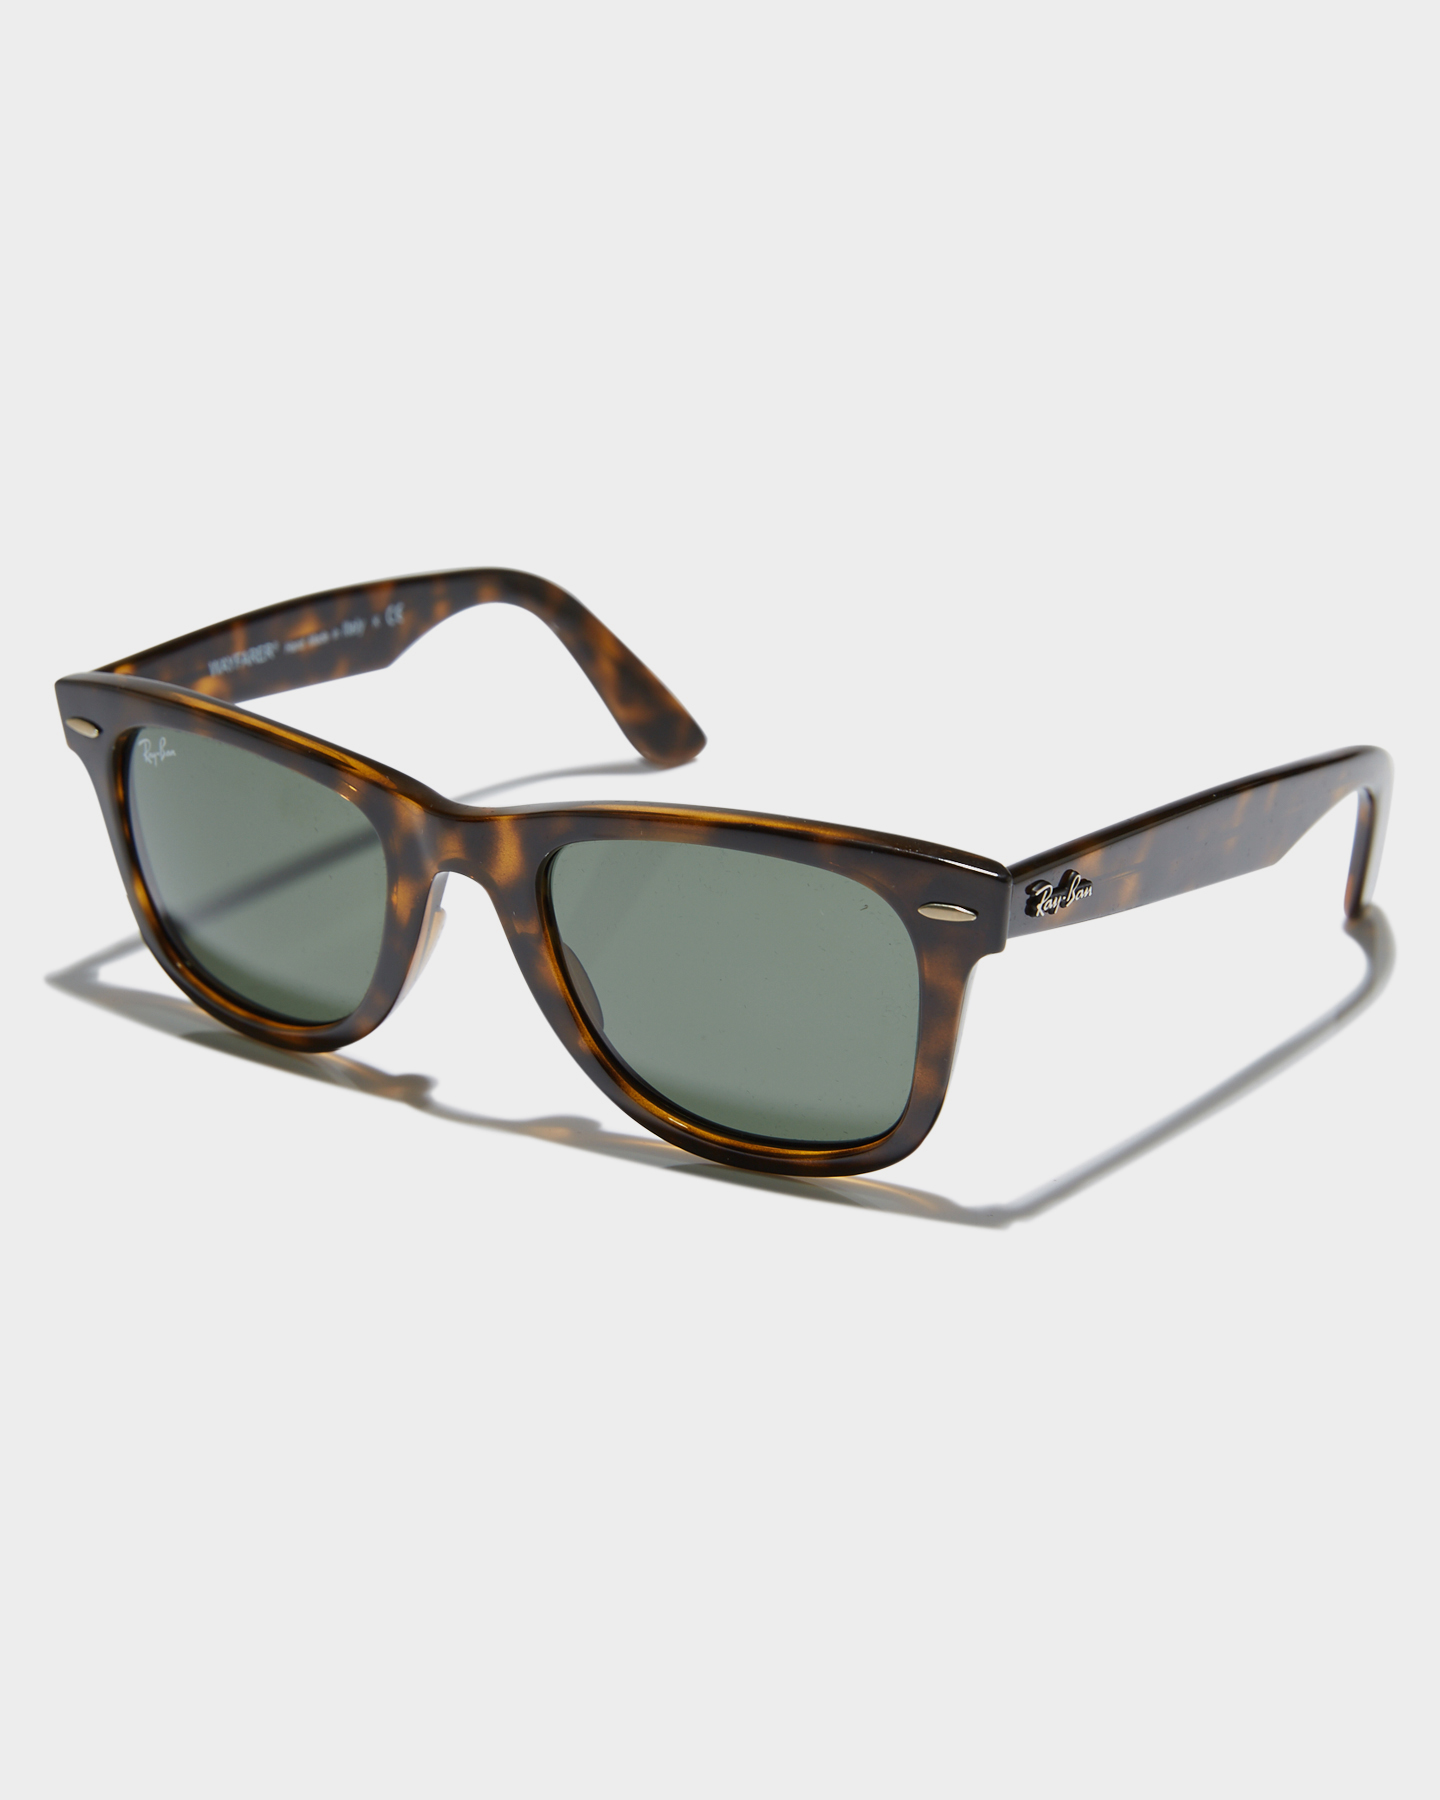 Ray-Ban New Original Wayfarer Sunglasses - Havana | SurfStitch